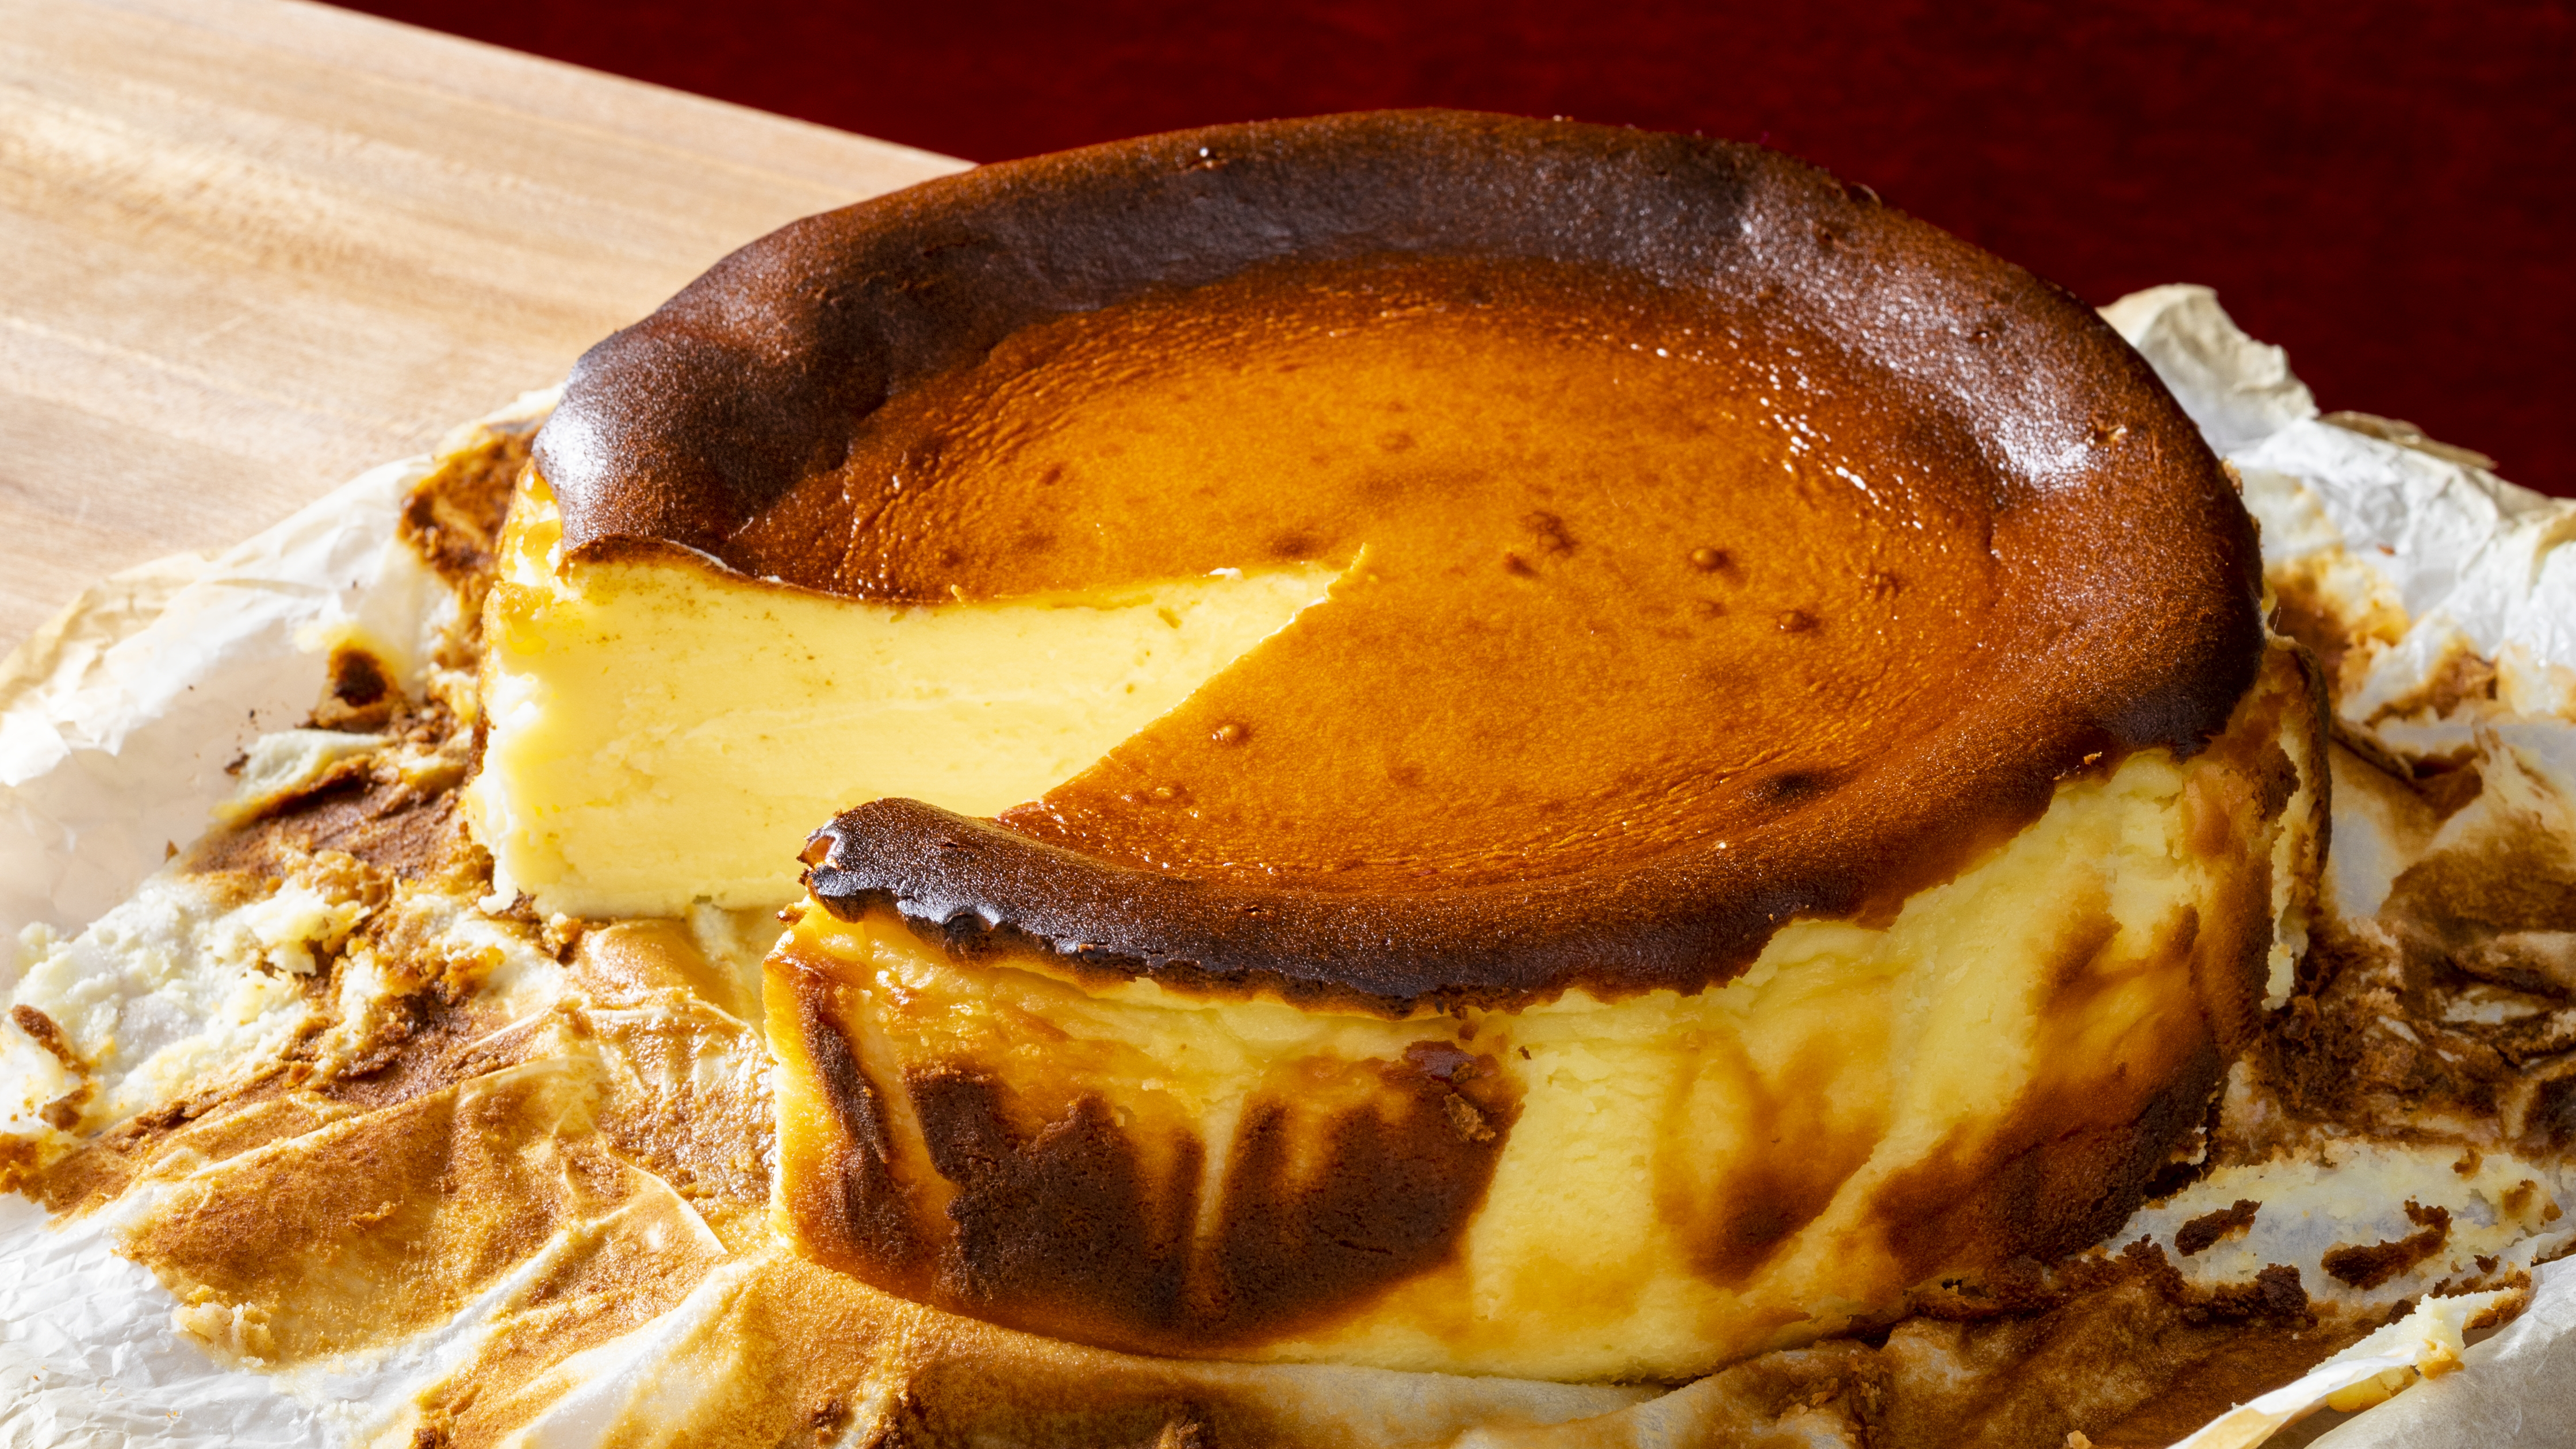 Basque-style cheesecake